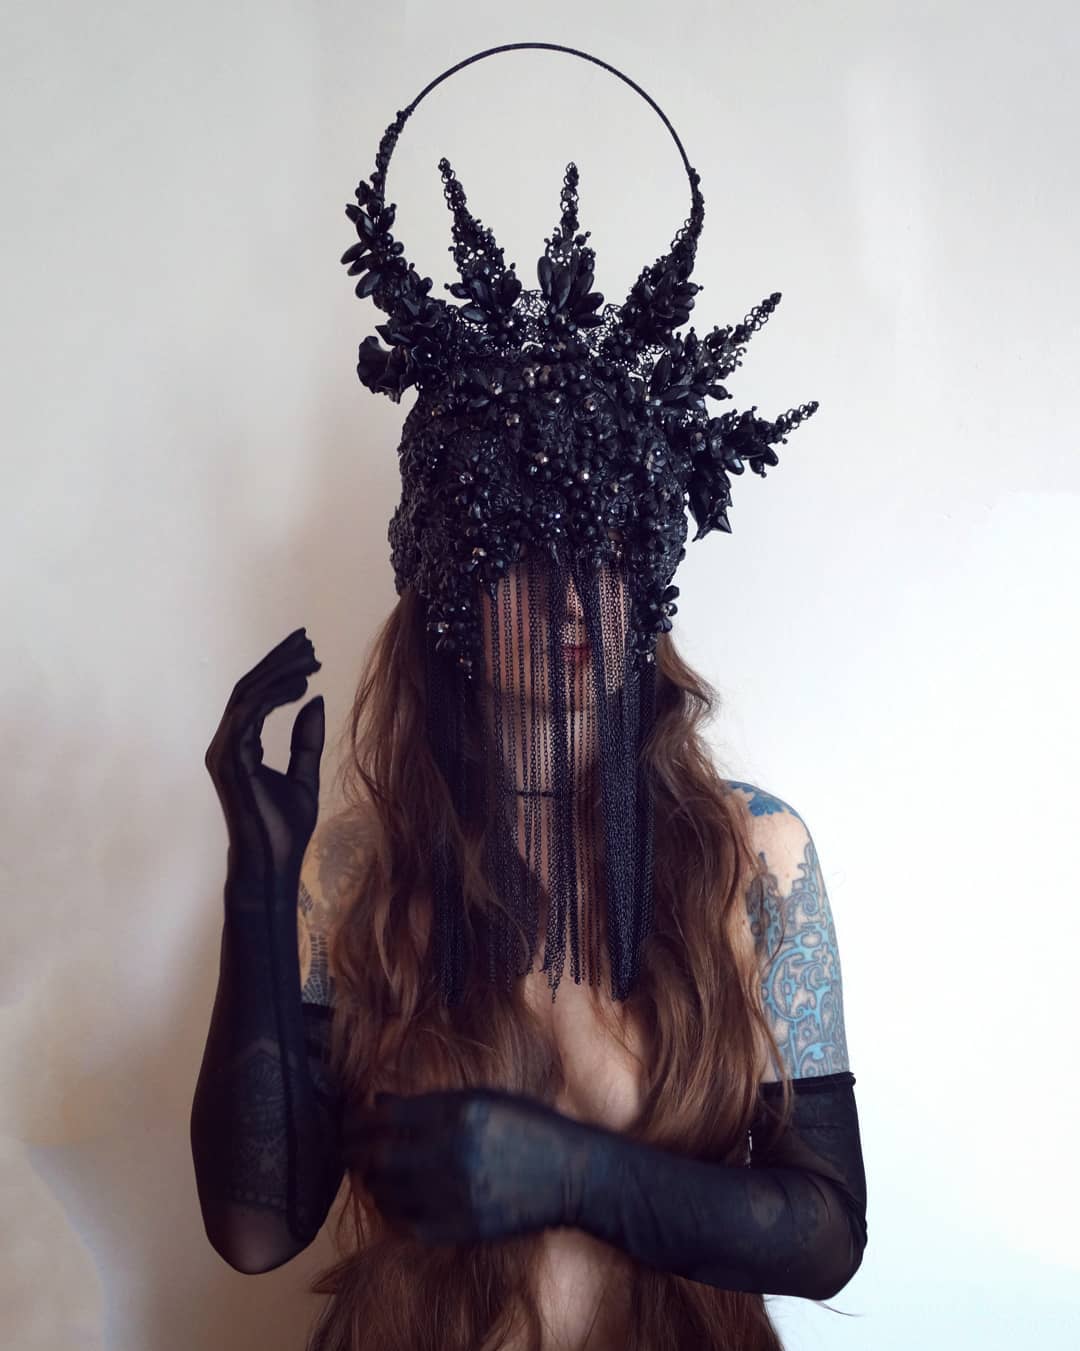 Agnieszka Osipa Costumes on Instagram: “bone corset #AgnieszkaOsipa #corset  #darkfashion #skeleton #bones #ornaments #jewellery #black #detail  #shoulders #costu…